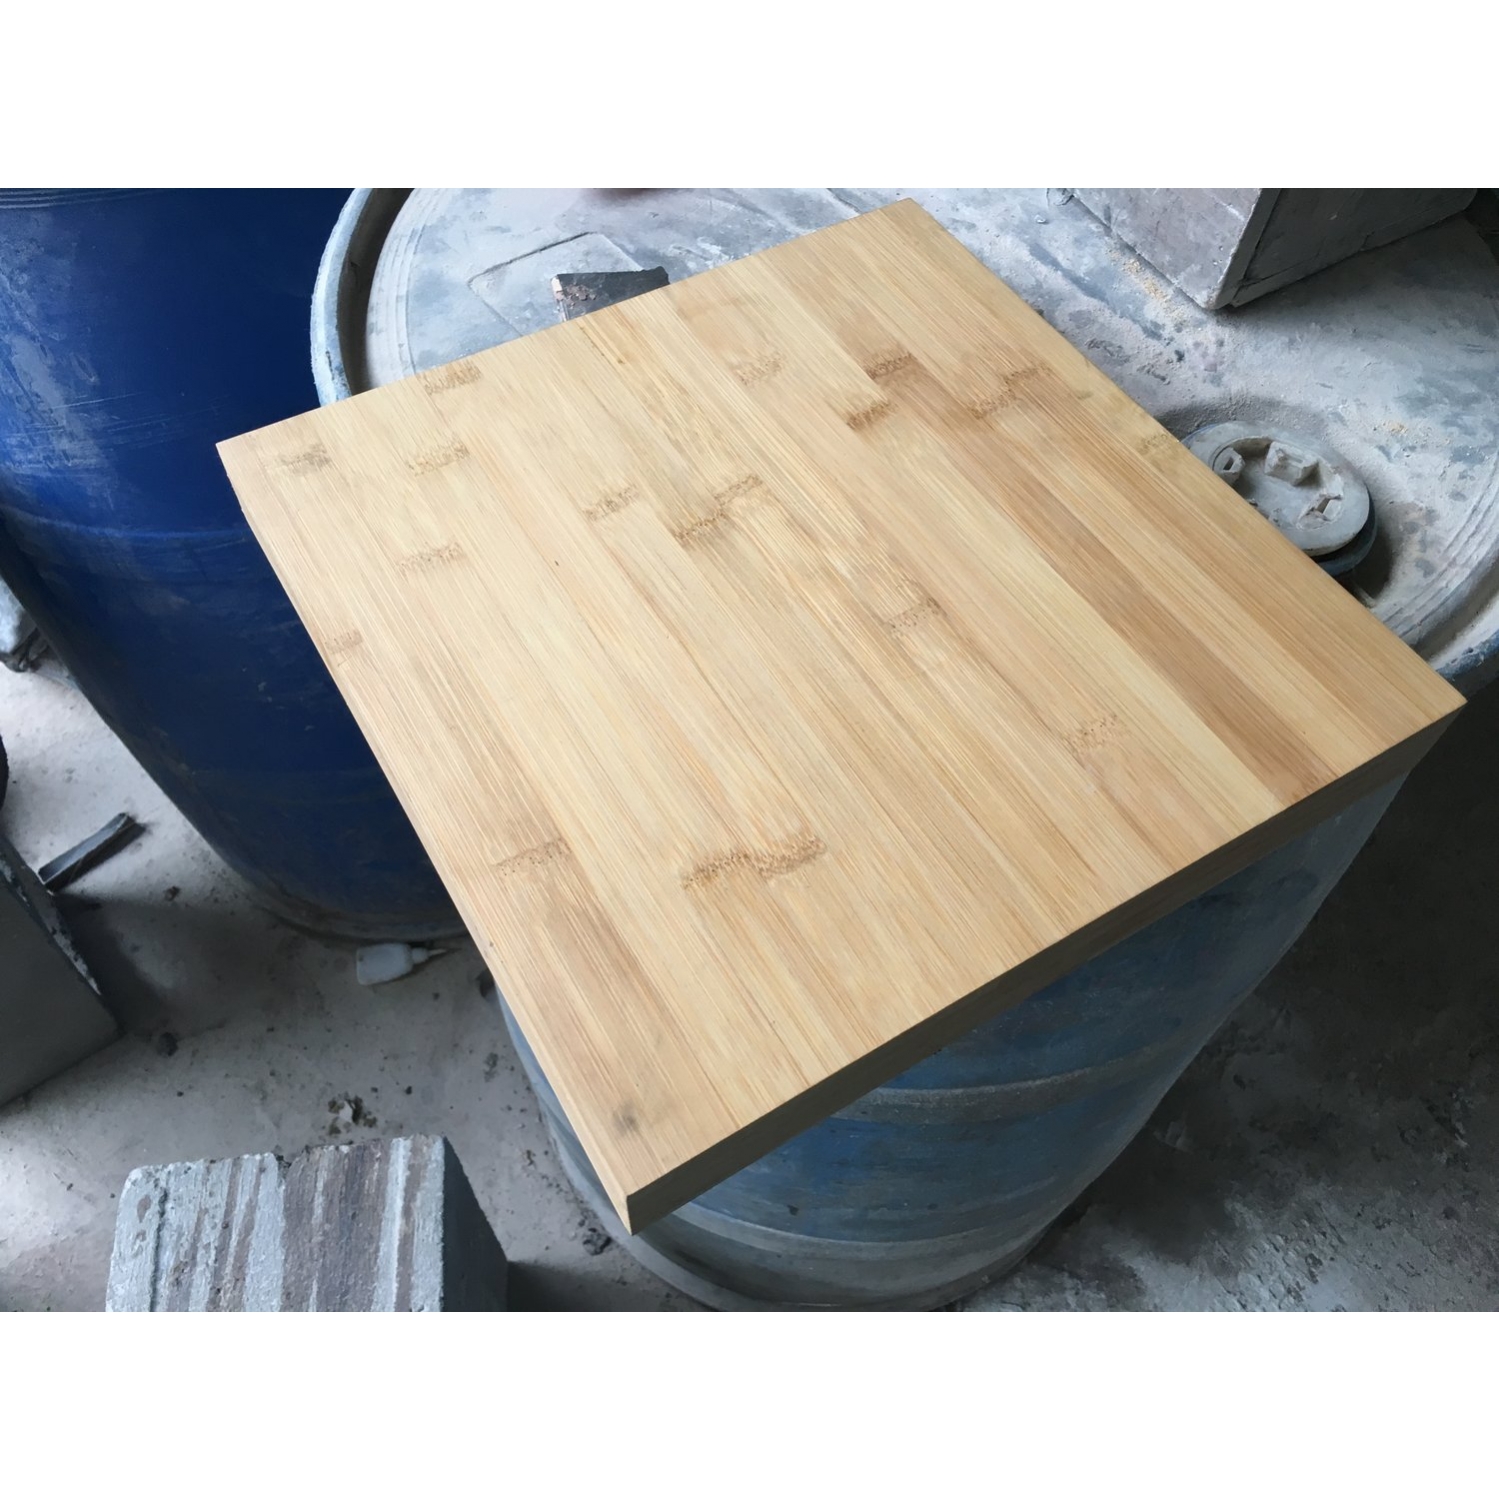 Carbonized horizontal bamboo barthroom vanity benchtop